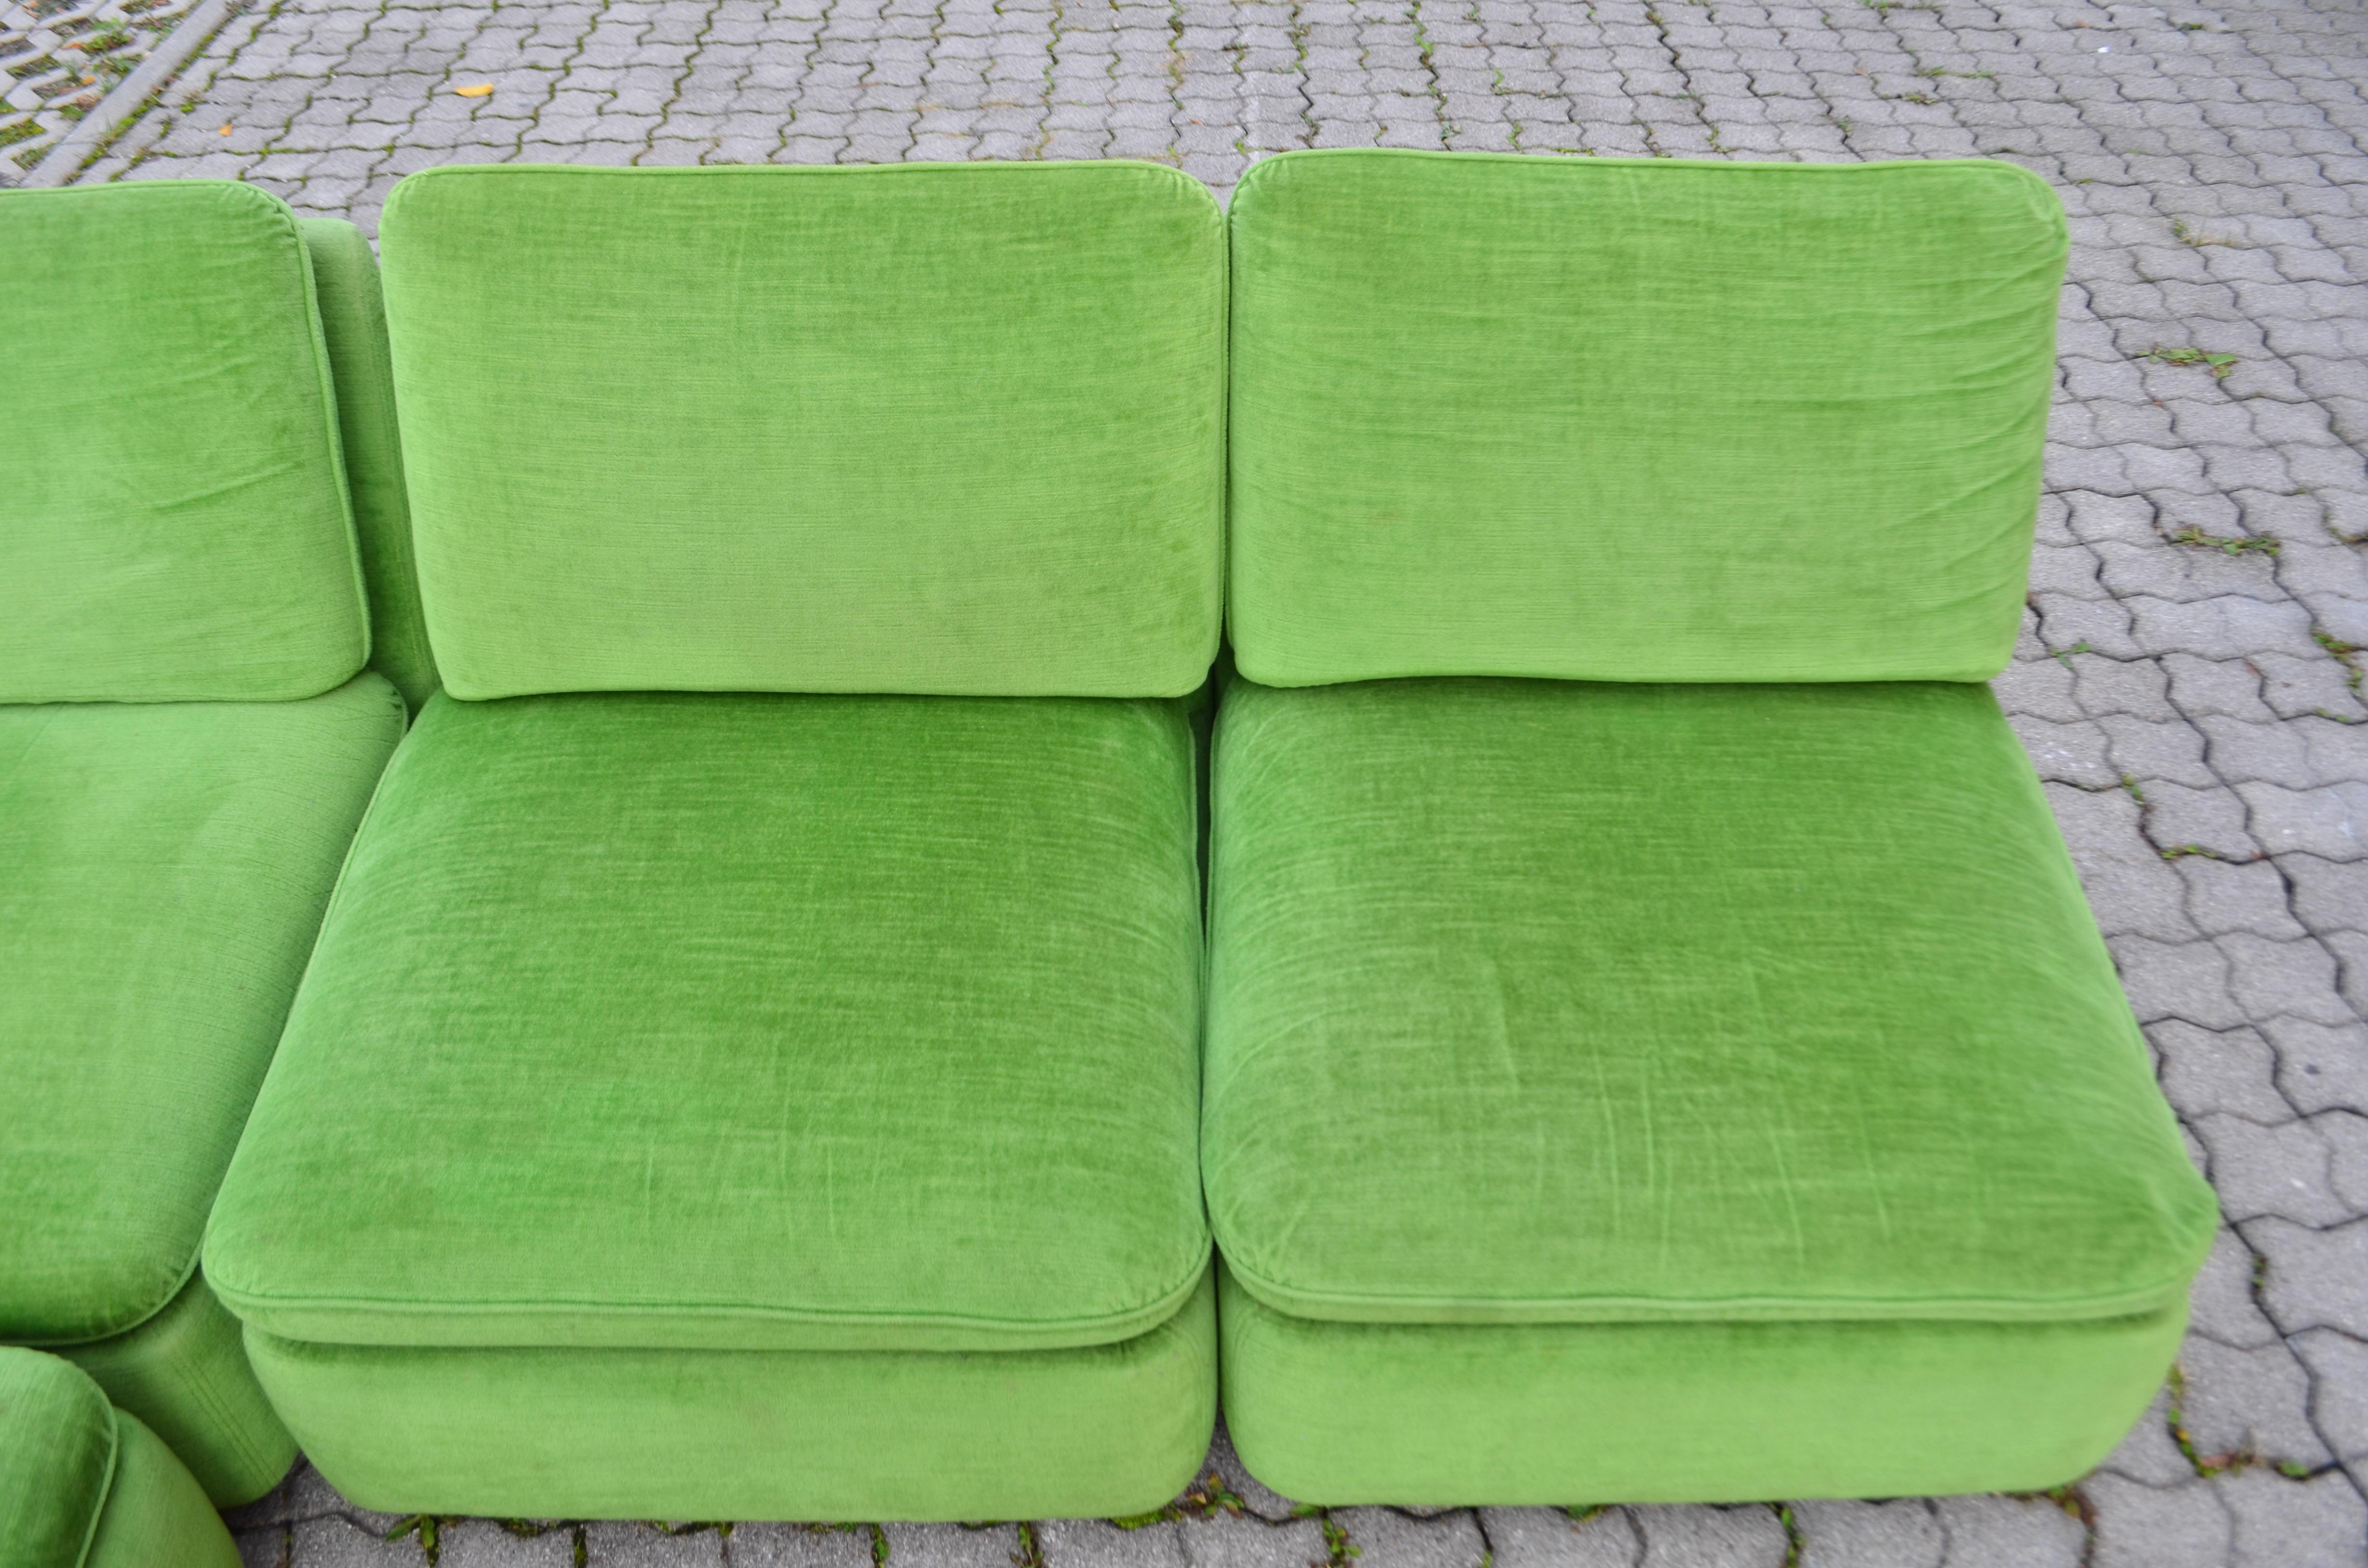 COR LÜBKE & ROLF Vintage Modular limegreen Living Room Suite Sectional Sofa  For Sale 1